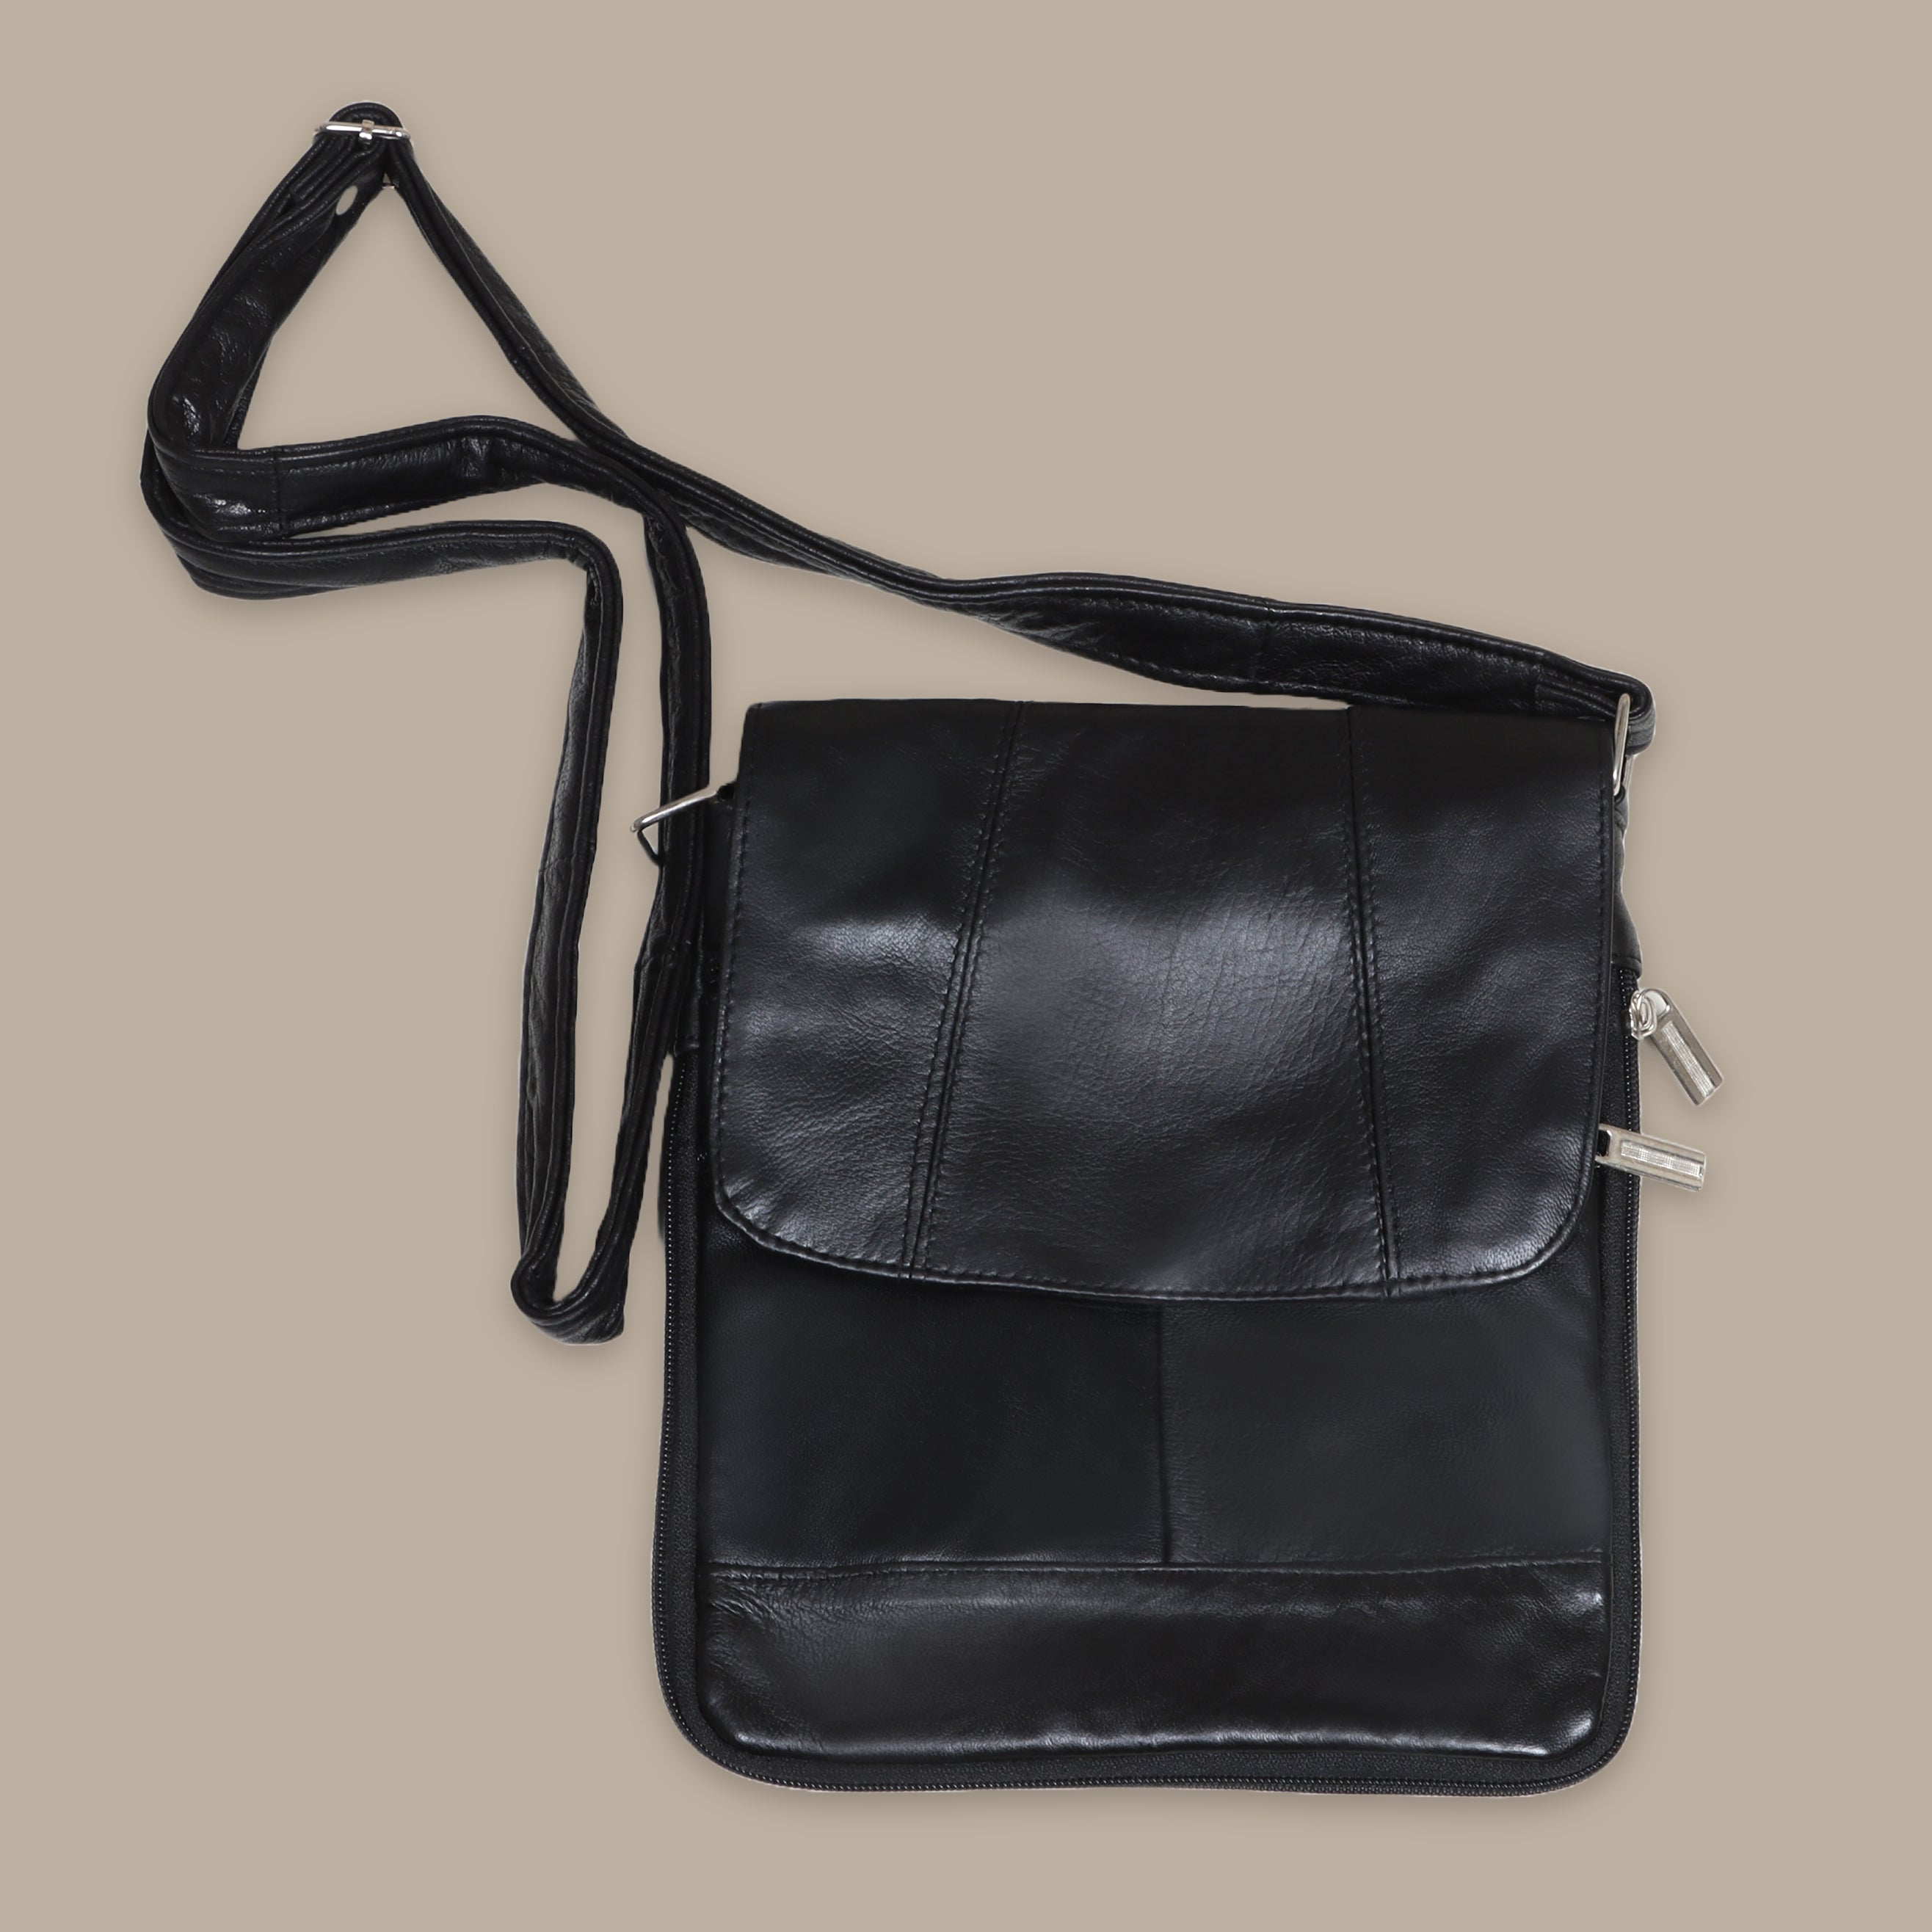 Noir Stitched Elegance: Black Leather Crossbody with Flap Pockets